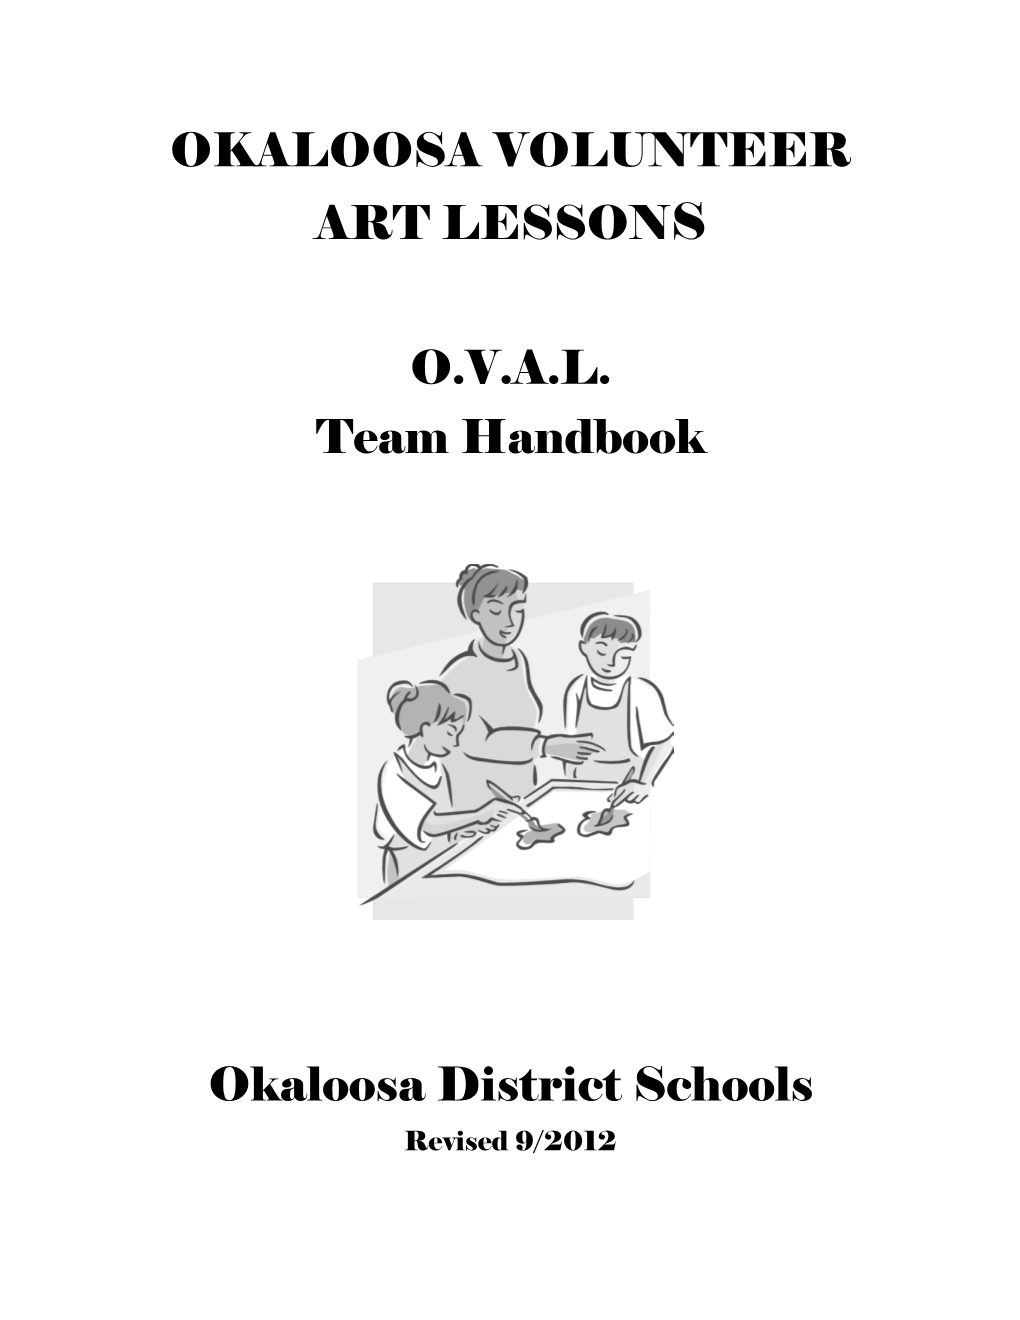 OKALOOSA VOLUNTEER ART LESSONS O.V.A.L. Team